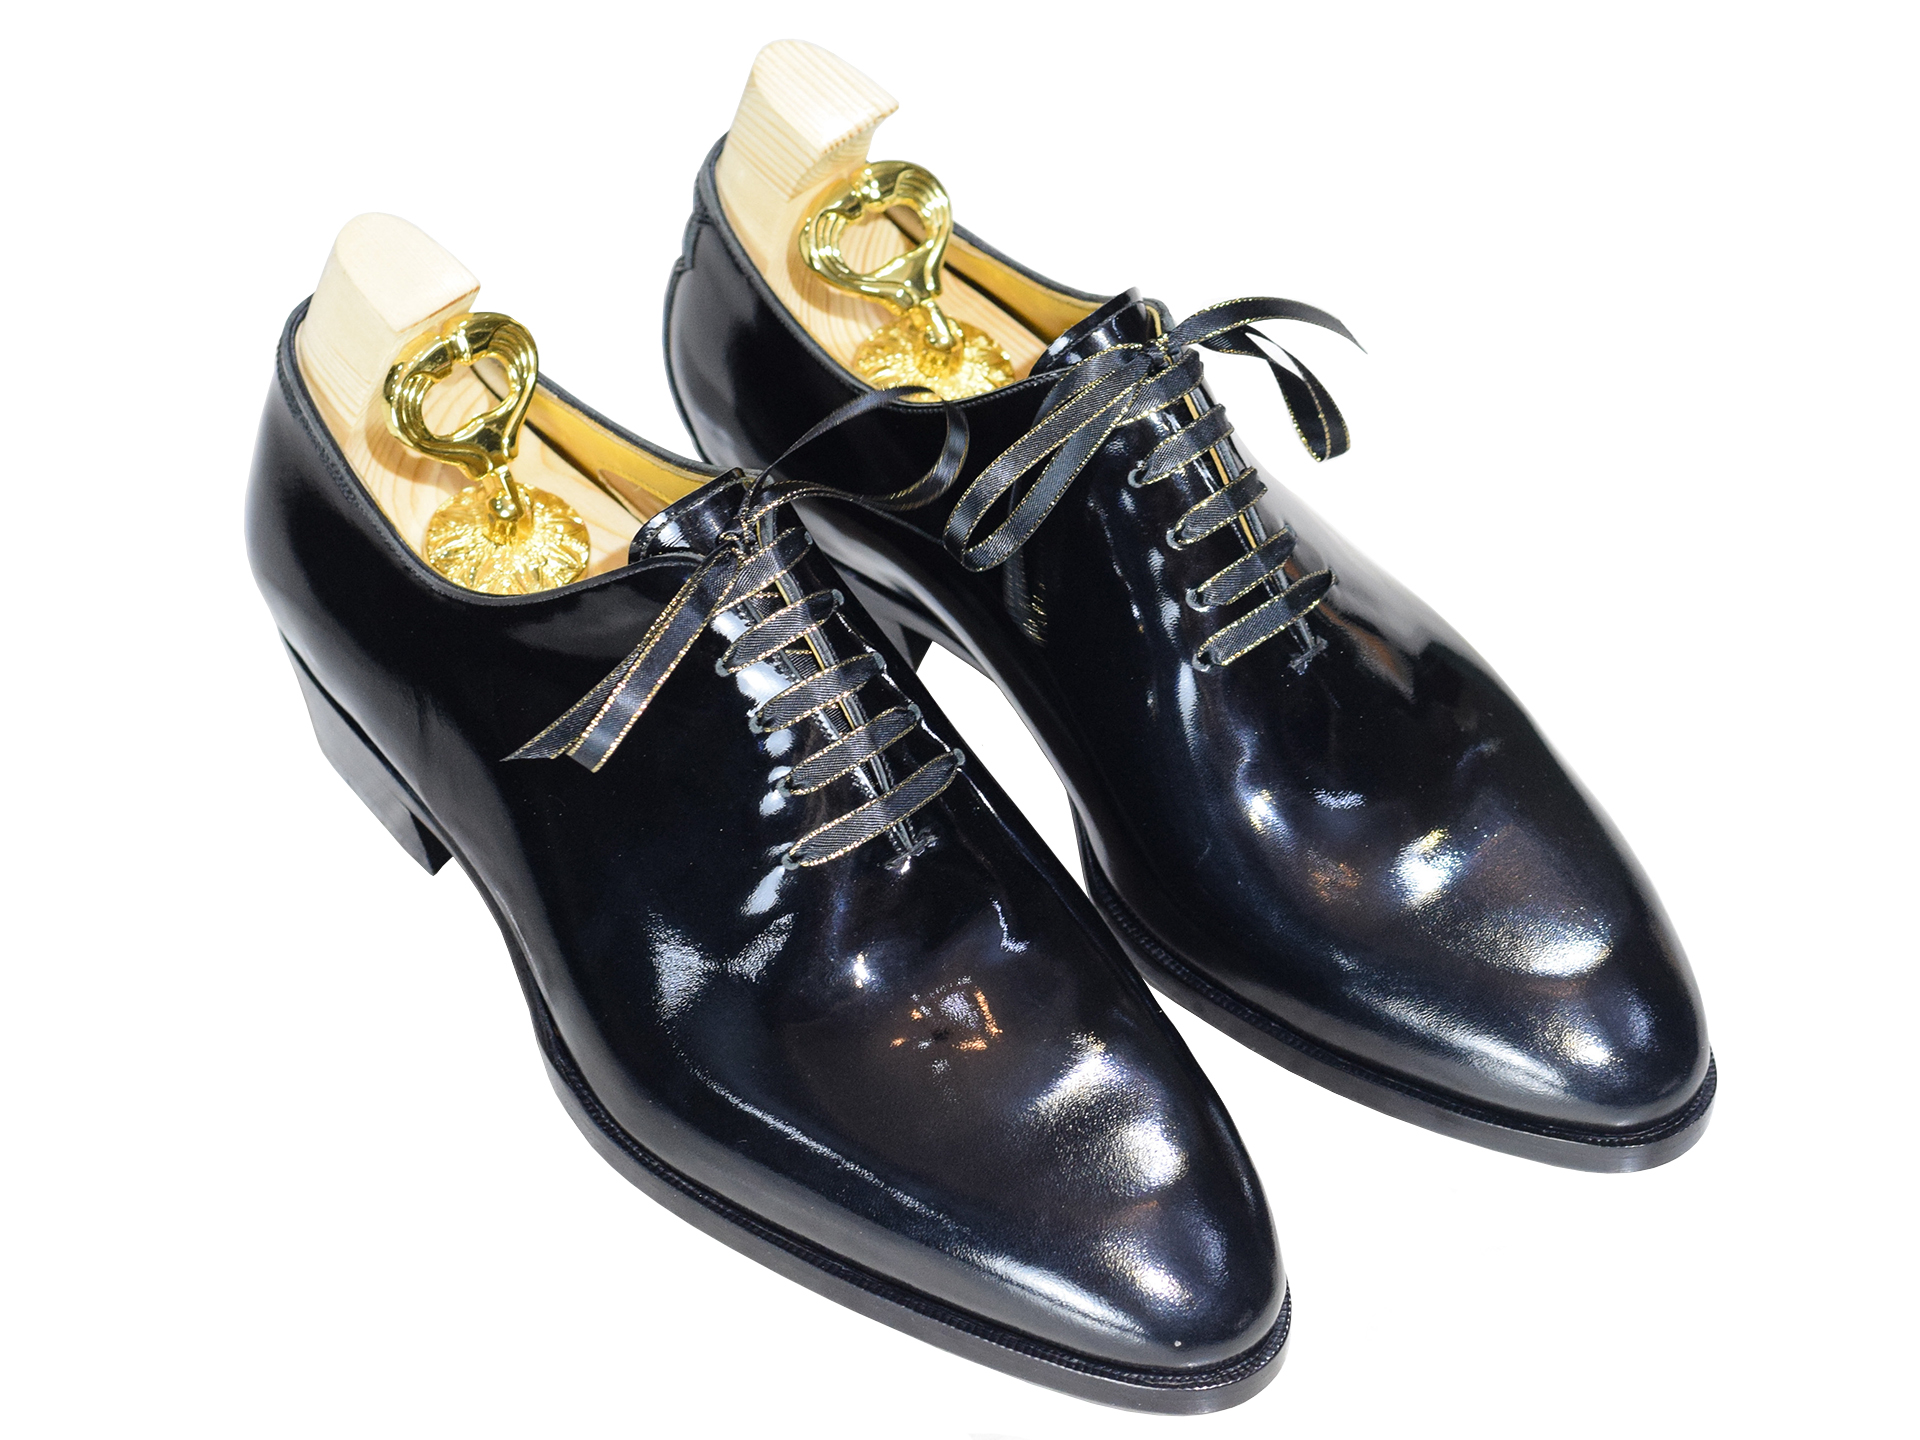 MTO wholecut shoes - Tuxedo dress shoes